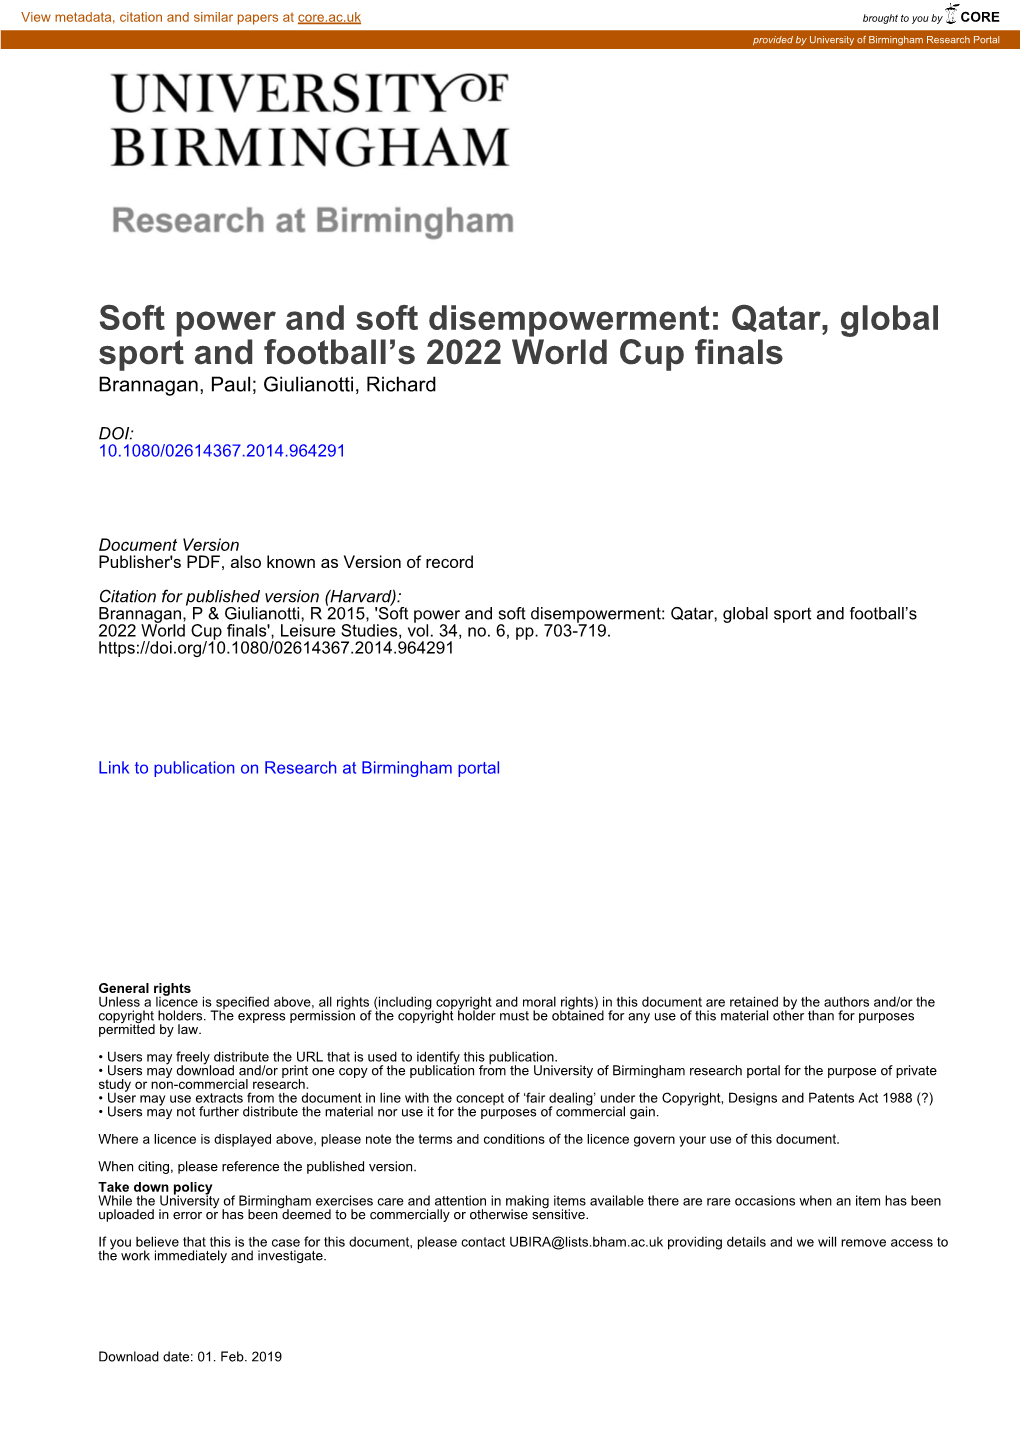 Soft Power and Soft Disempowerment: Qatar, Global Sport and Football’S 2022 World Cup Finals Brannagan, Paul; Giulianotti, Richard